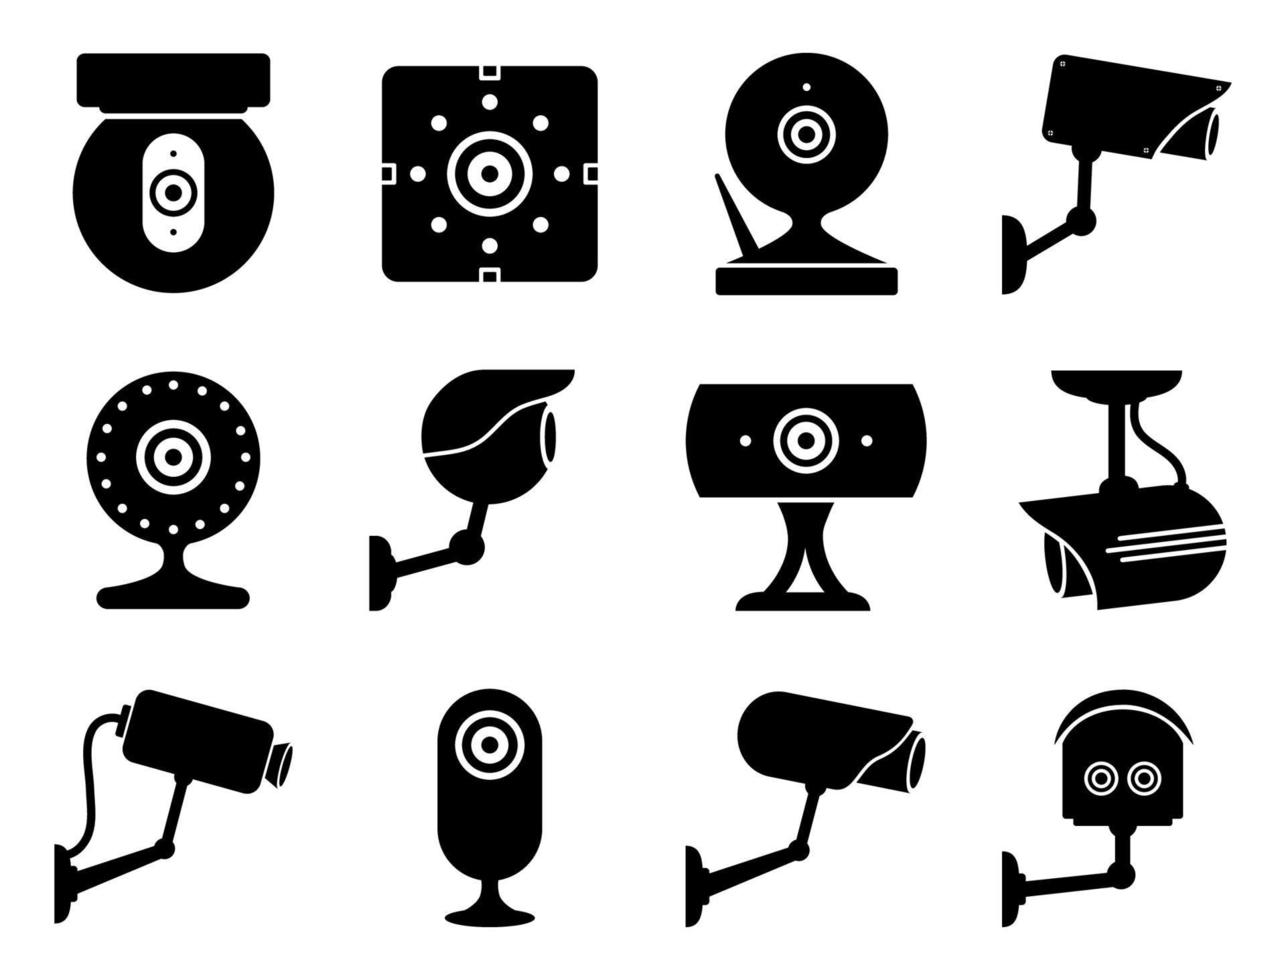 CCTV camera icon set - vector illustration .